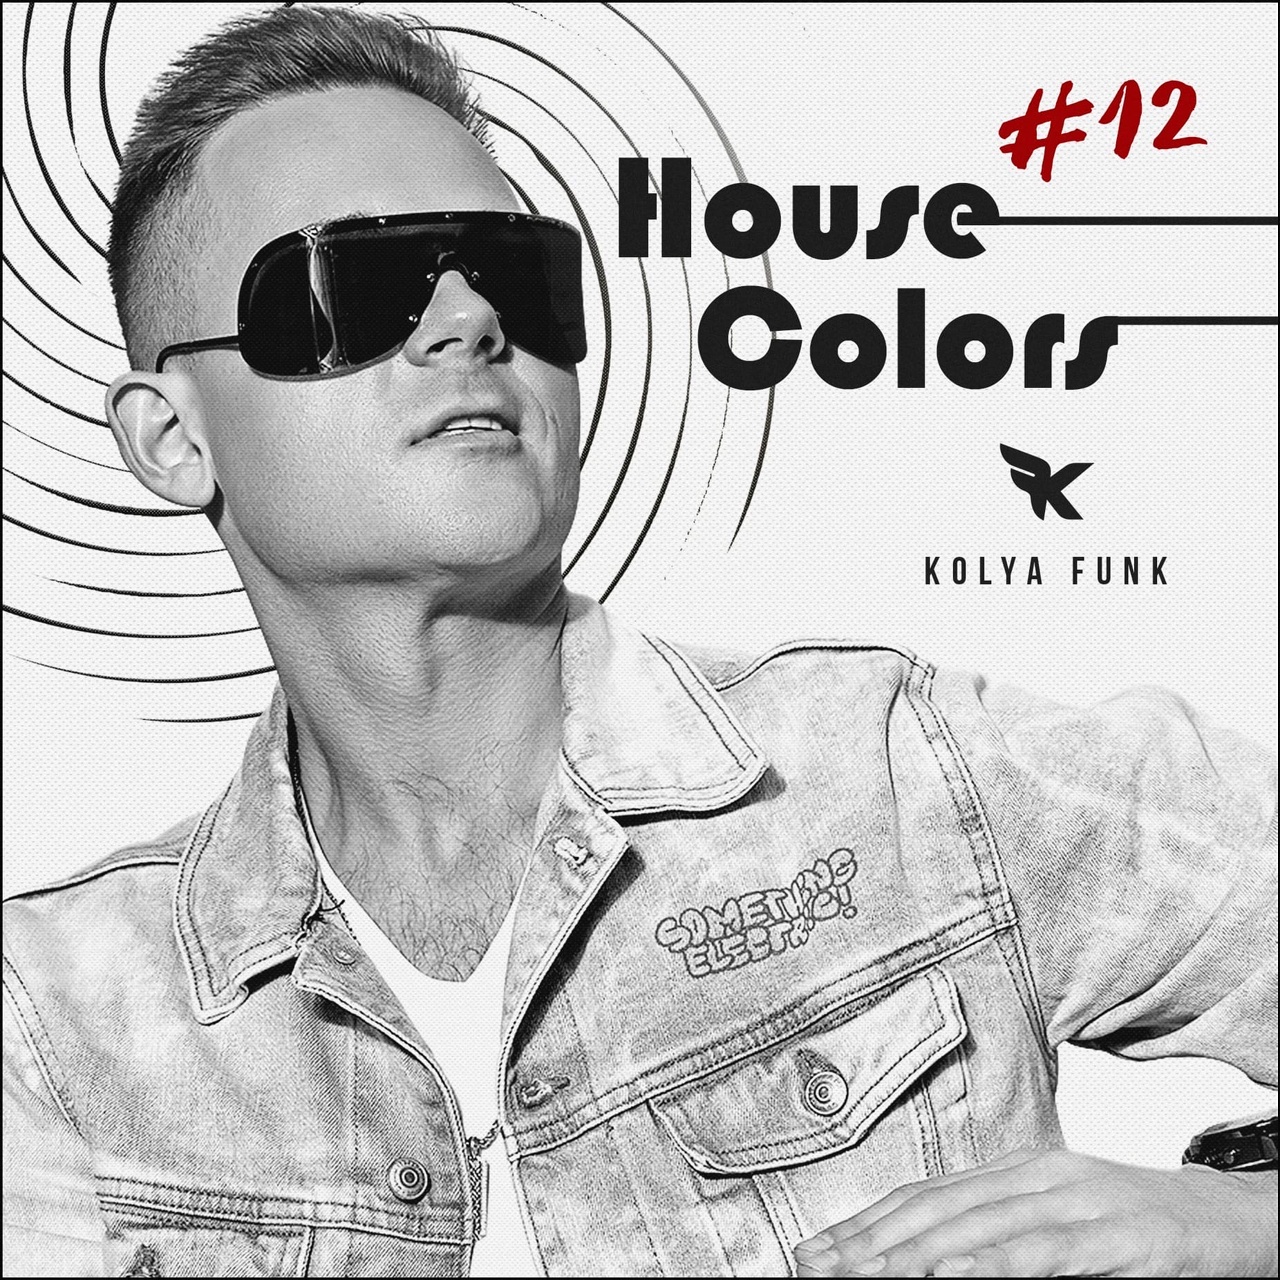 Parsisiųsti Kolya Funk - House Colors #012